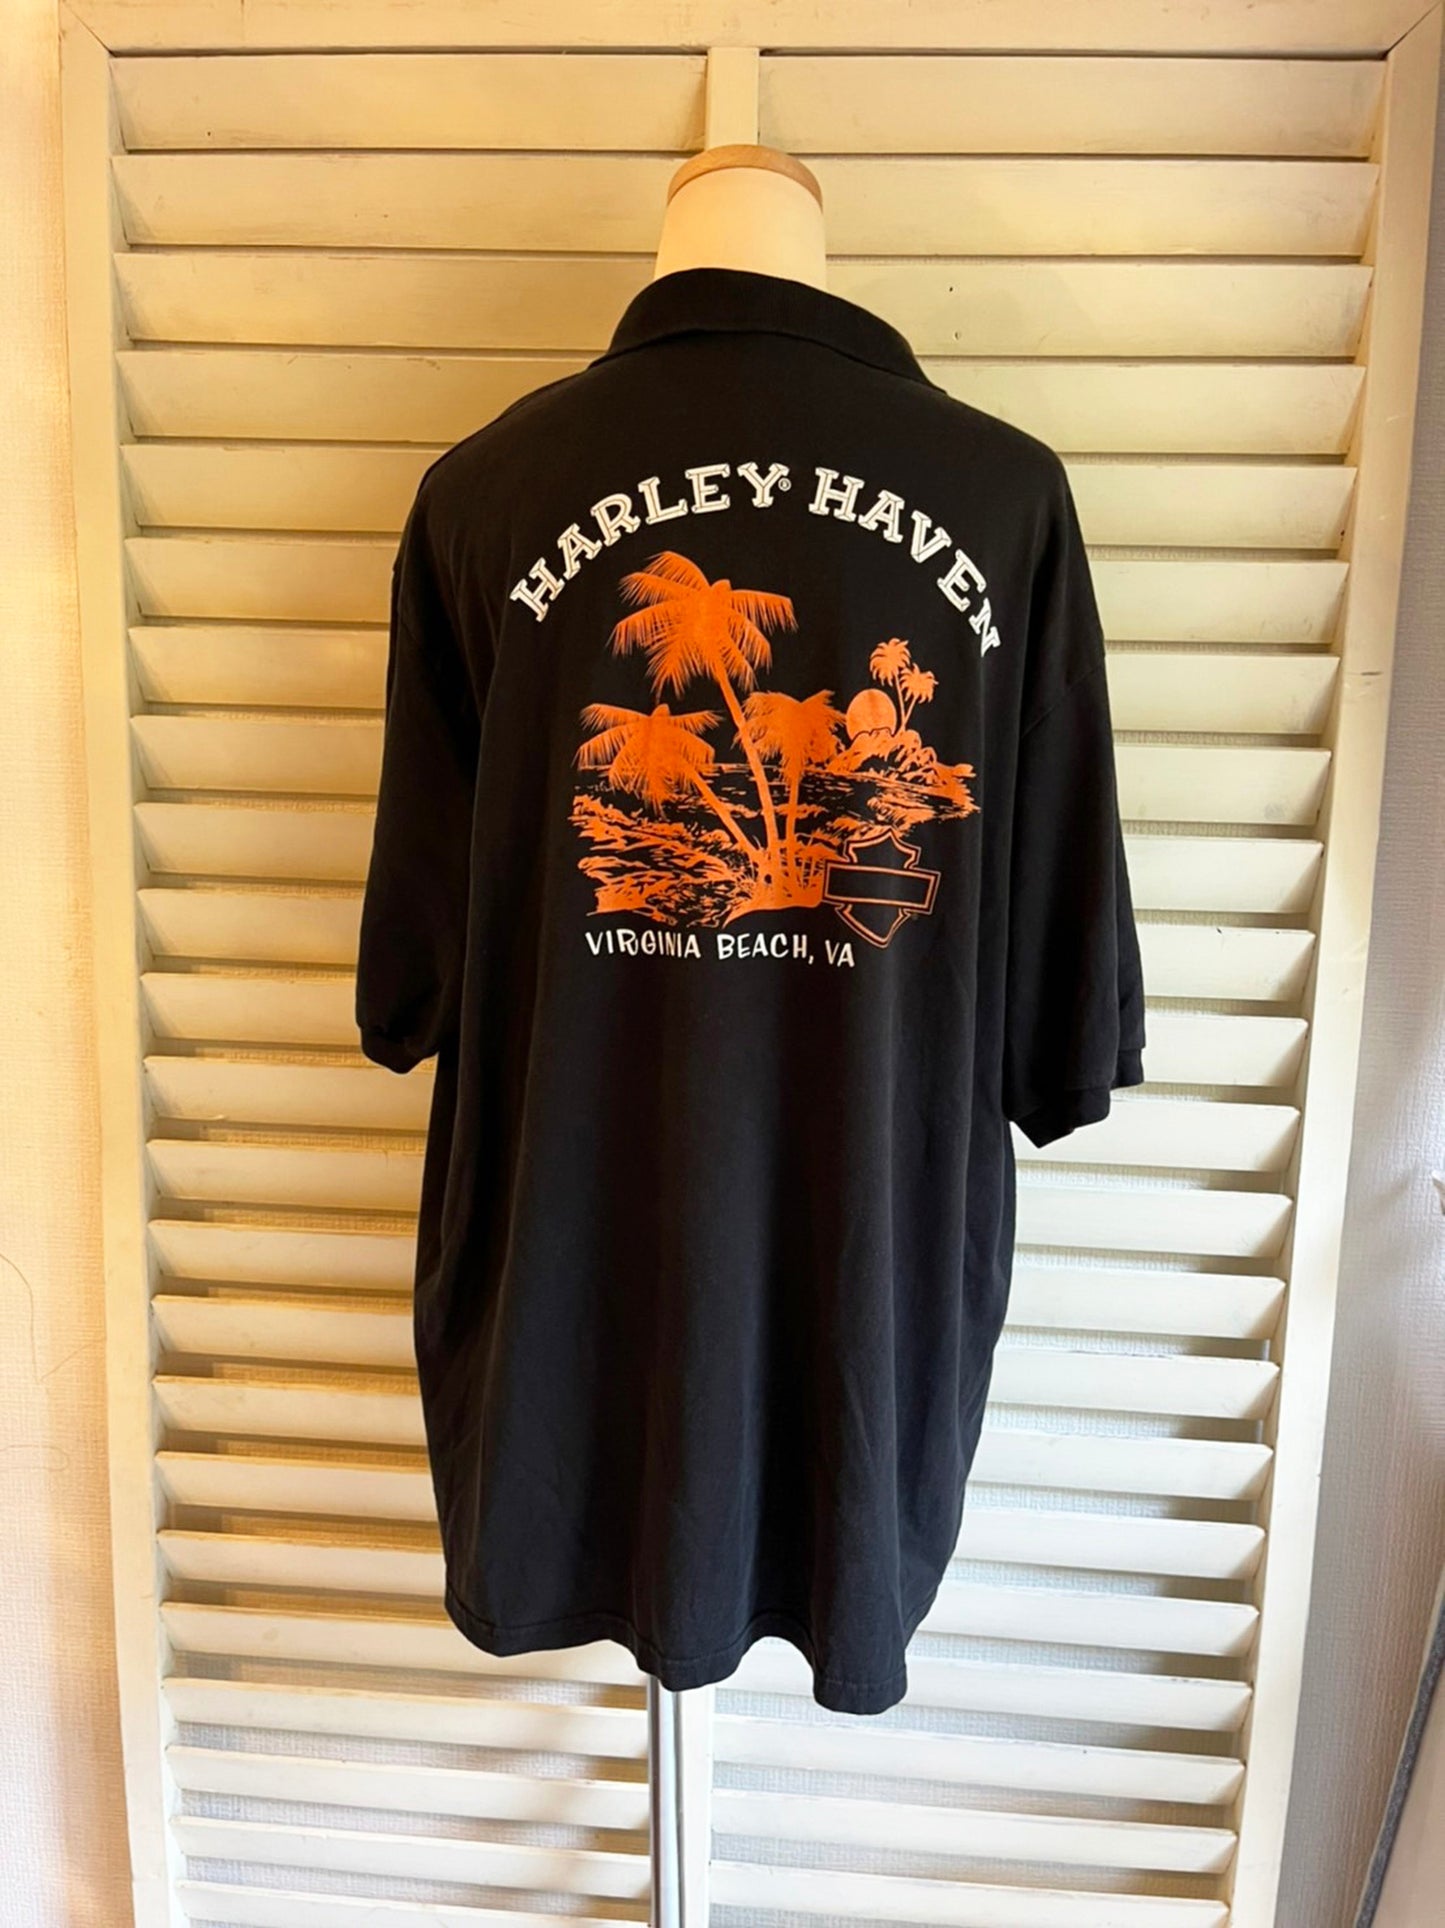 【Harley Davidson】ハーレーダビッドソン virginia beach 両面プリントポロシャツ (men's XL)